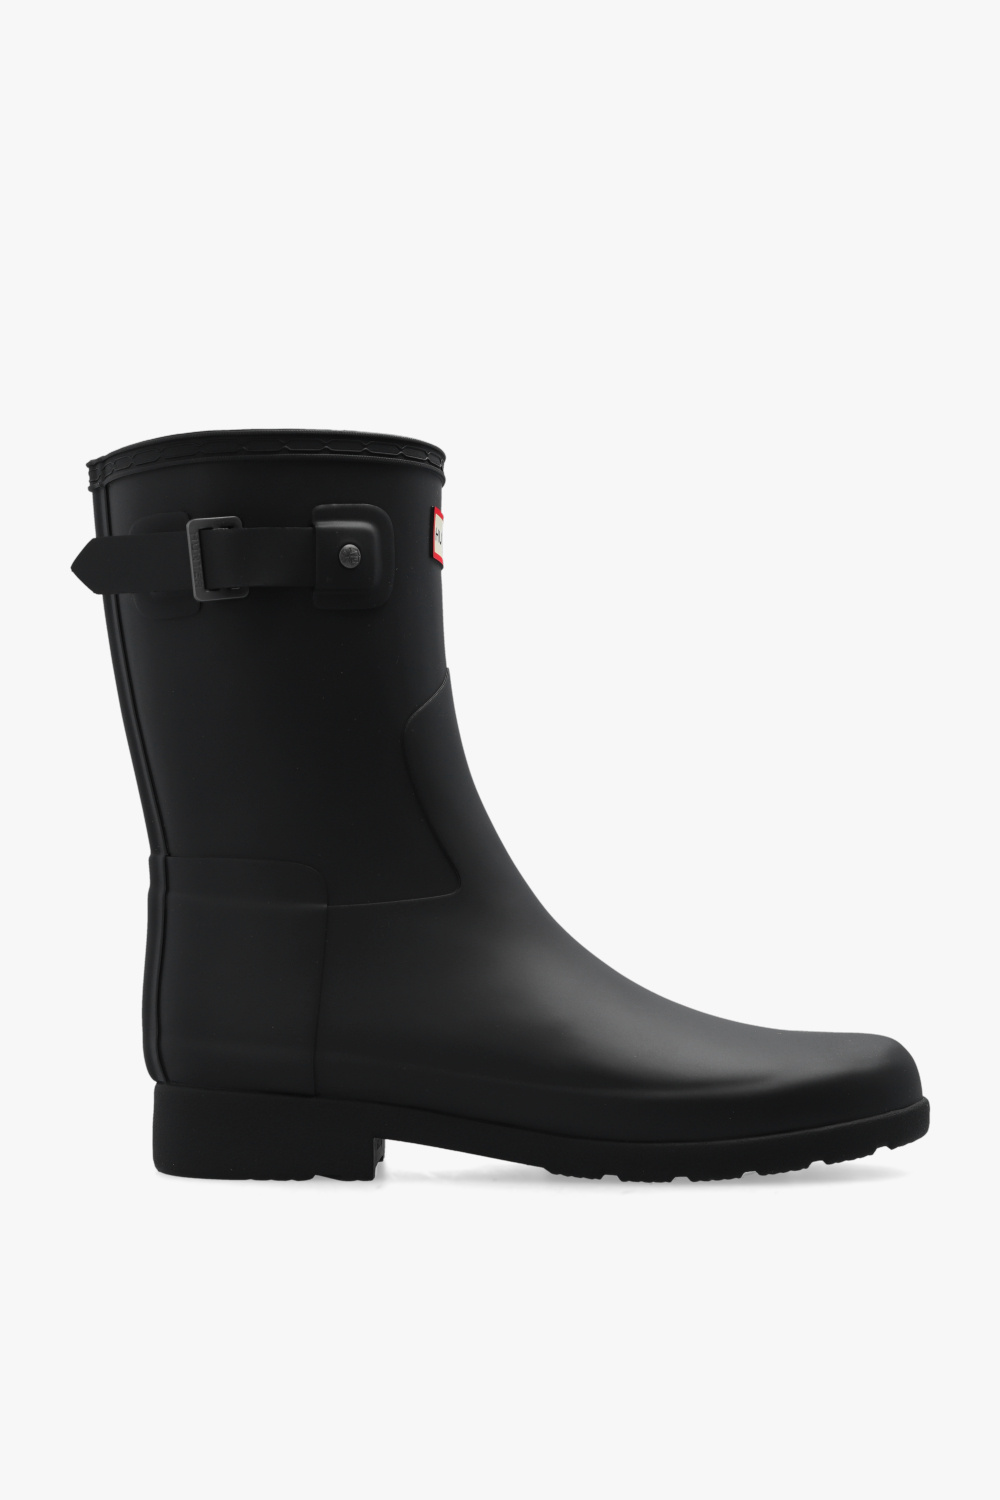 Hunter ‘Original Refined’ rain boots